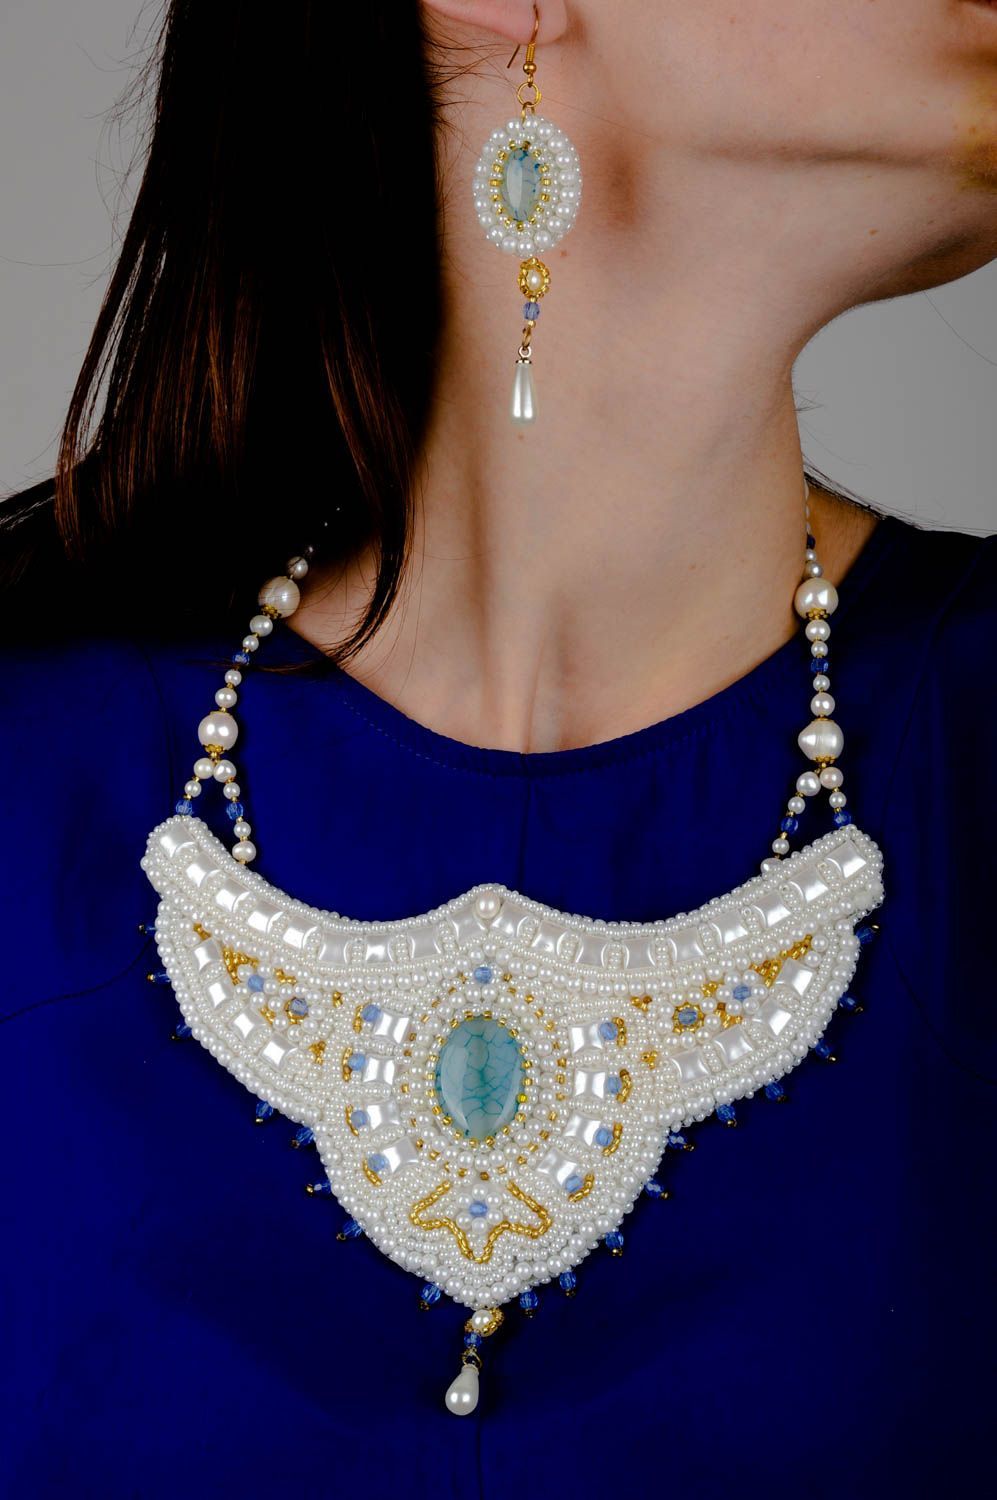 Handmade earrings designer pendant beaded accessory beads jewelry gift ideas photo 5